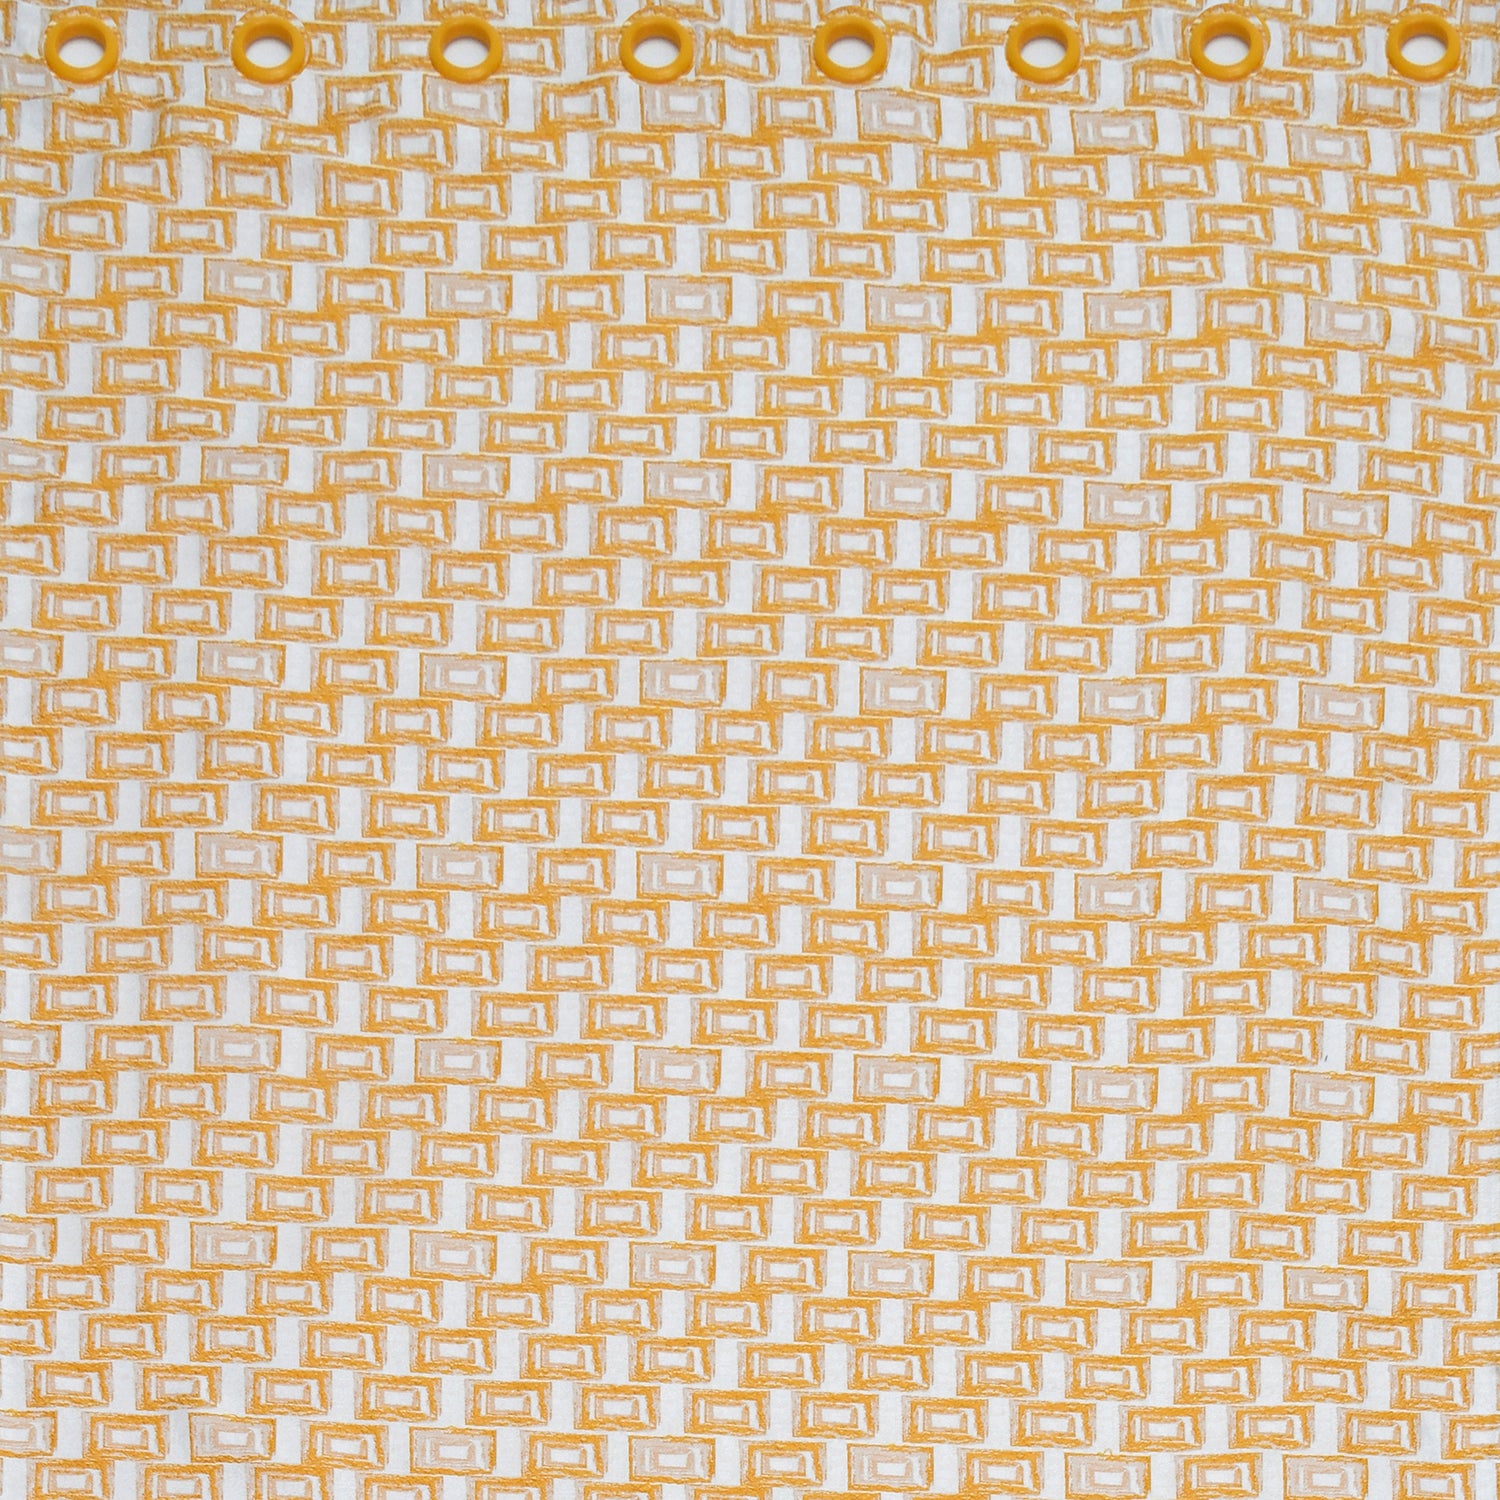 Grace Jacquard Geometric 7 Ft Polyester Door Curtains Set Of 2 (Mustard)